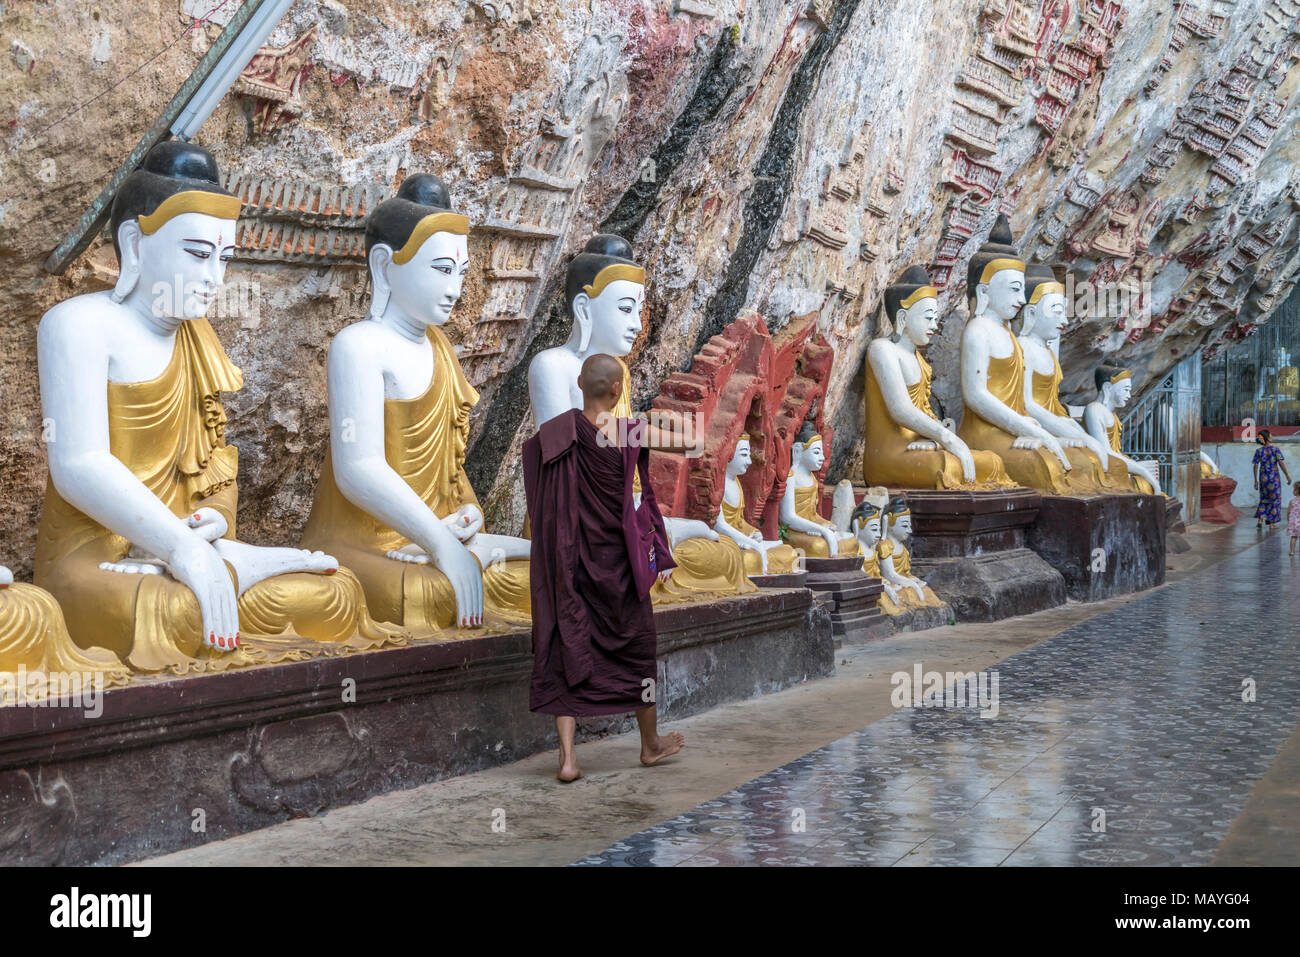 Buddha-Statuen in der Kawgon-Höhle, Hpa-an, Myanmar, Asien  |  Buddha statues in the Kawgun Cave, Hpa-an, Myanmar, Asia Stock Photo